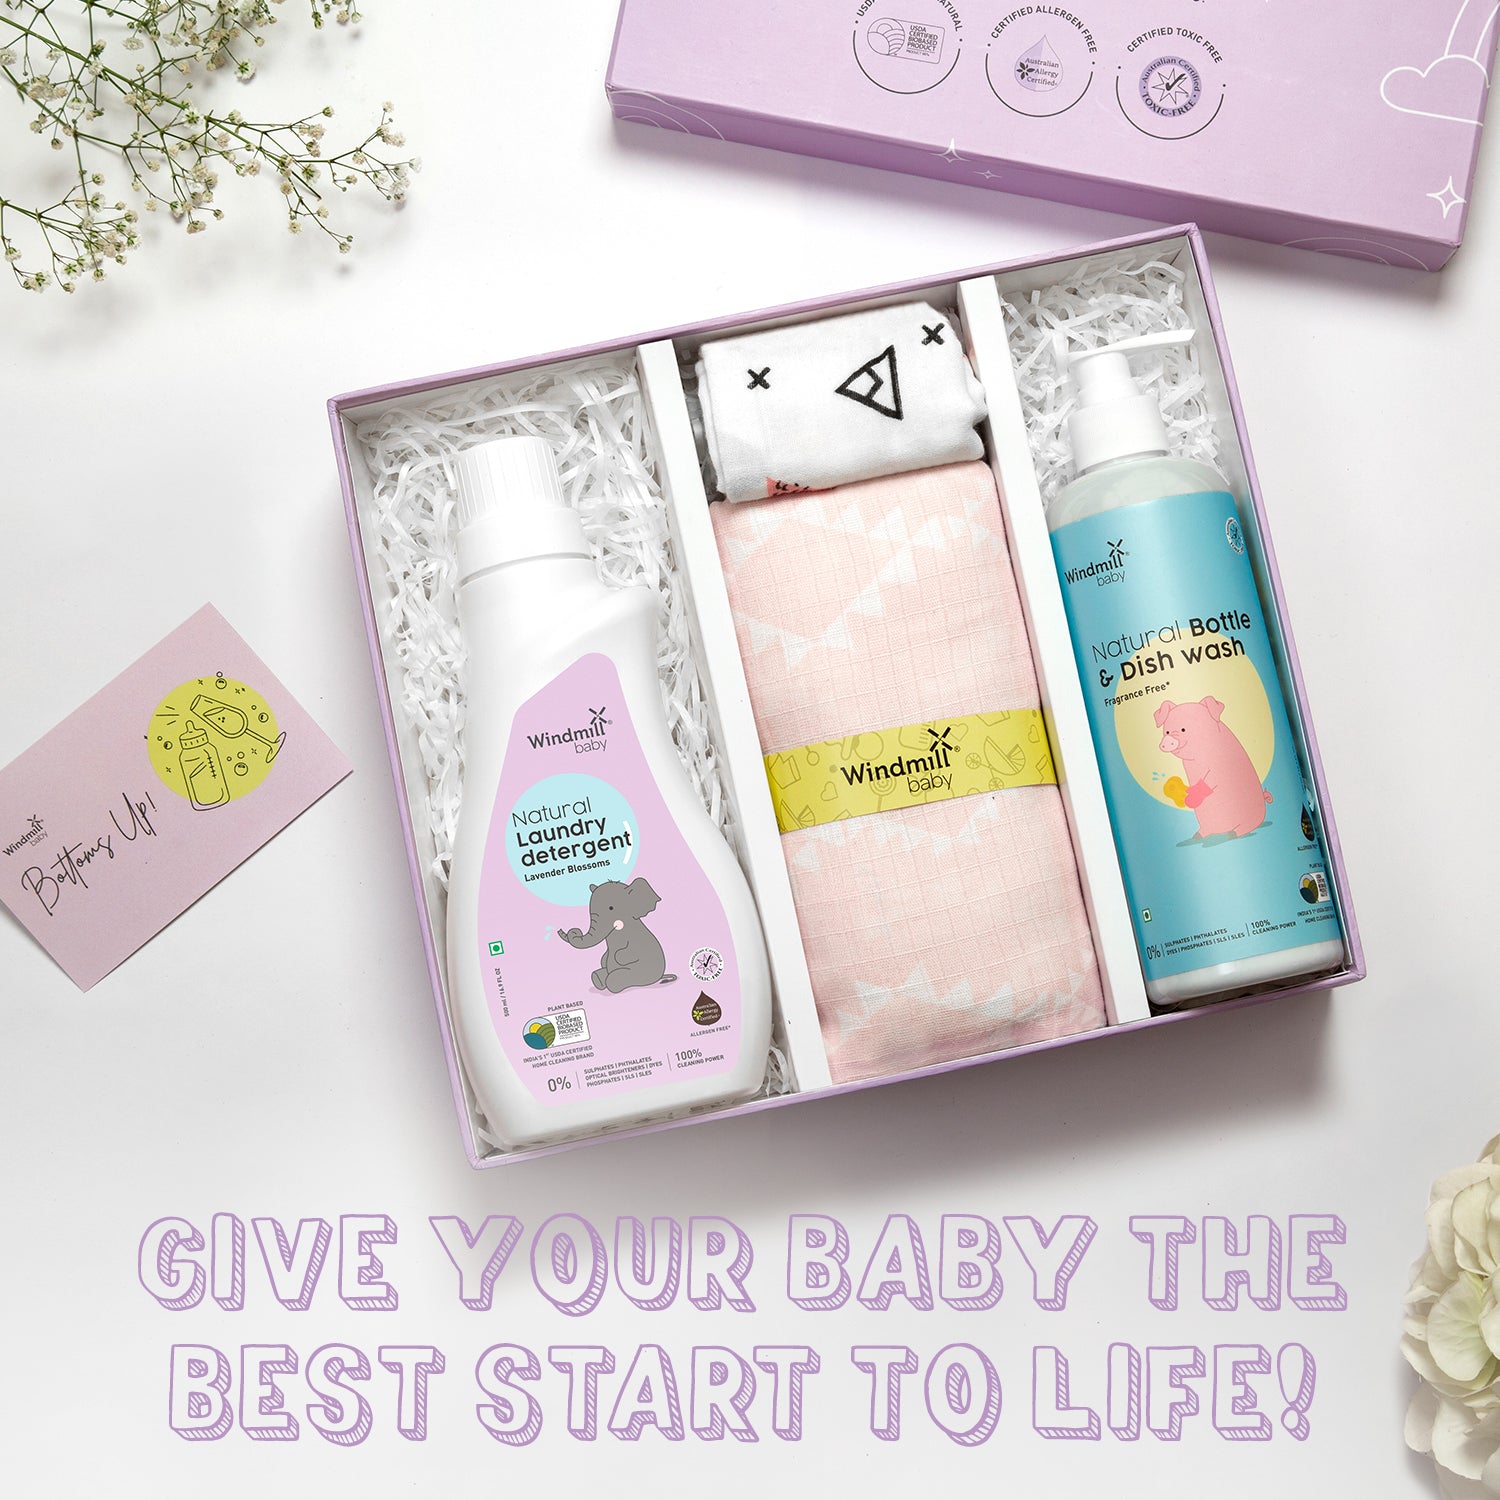 New Born Newborn Essentials Gift Set